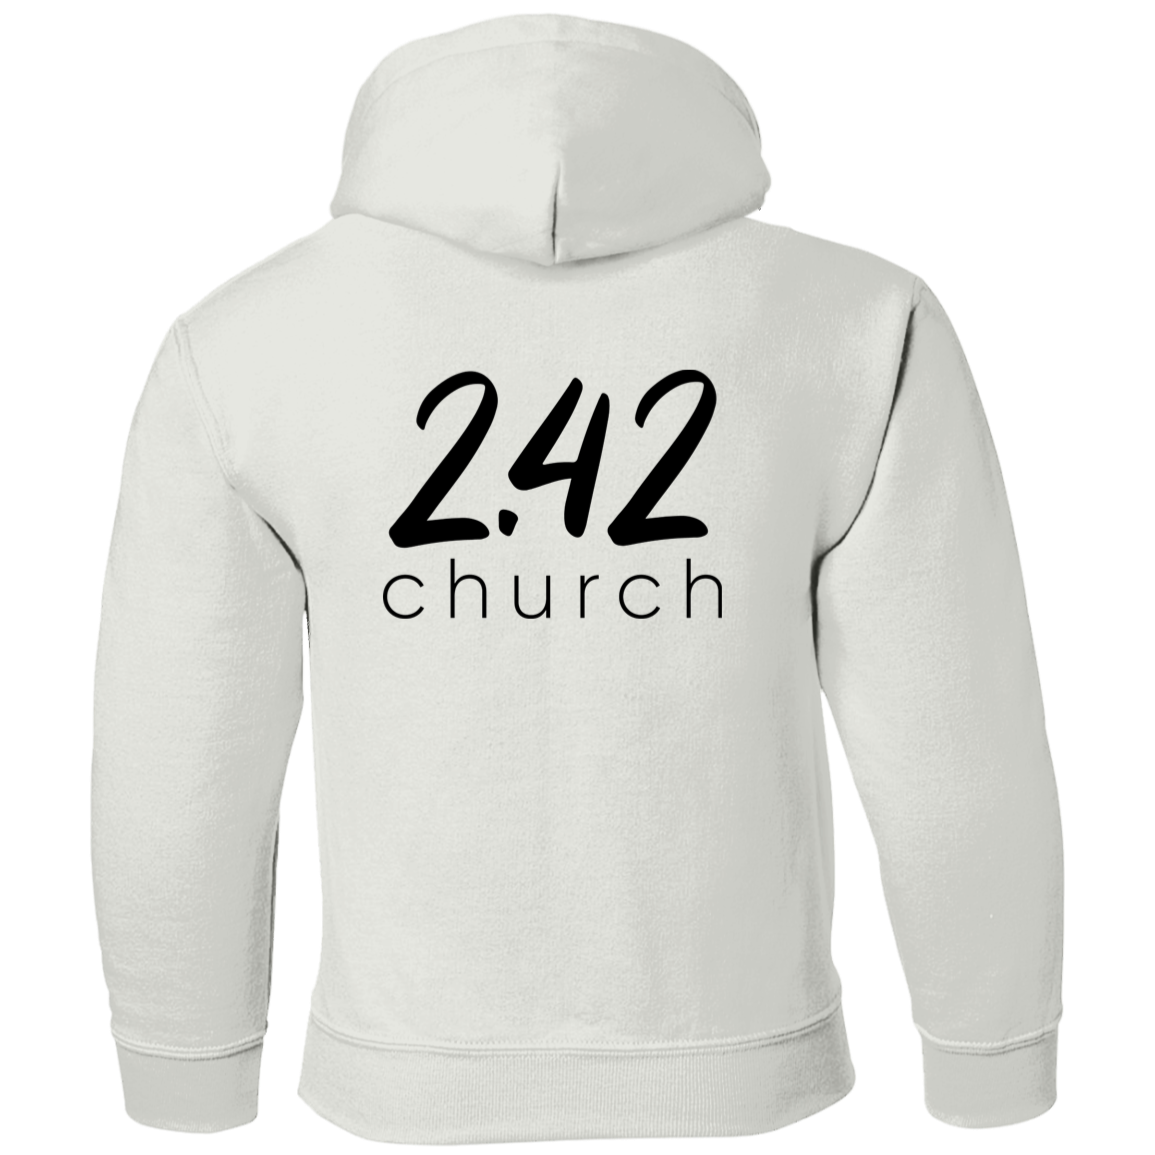 2.42 Church Hoodies - Black Logo